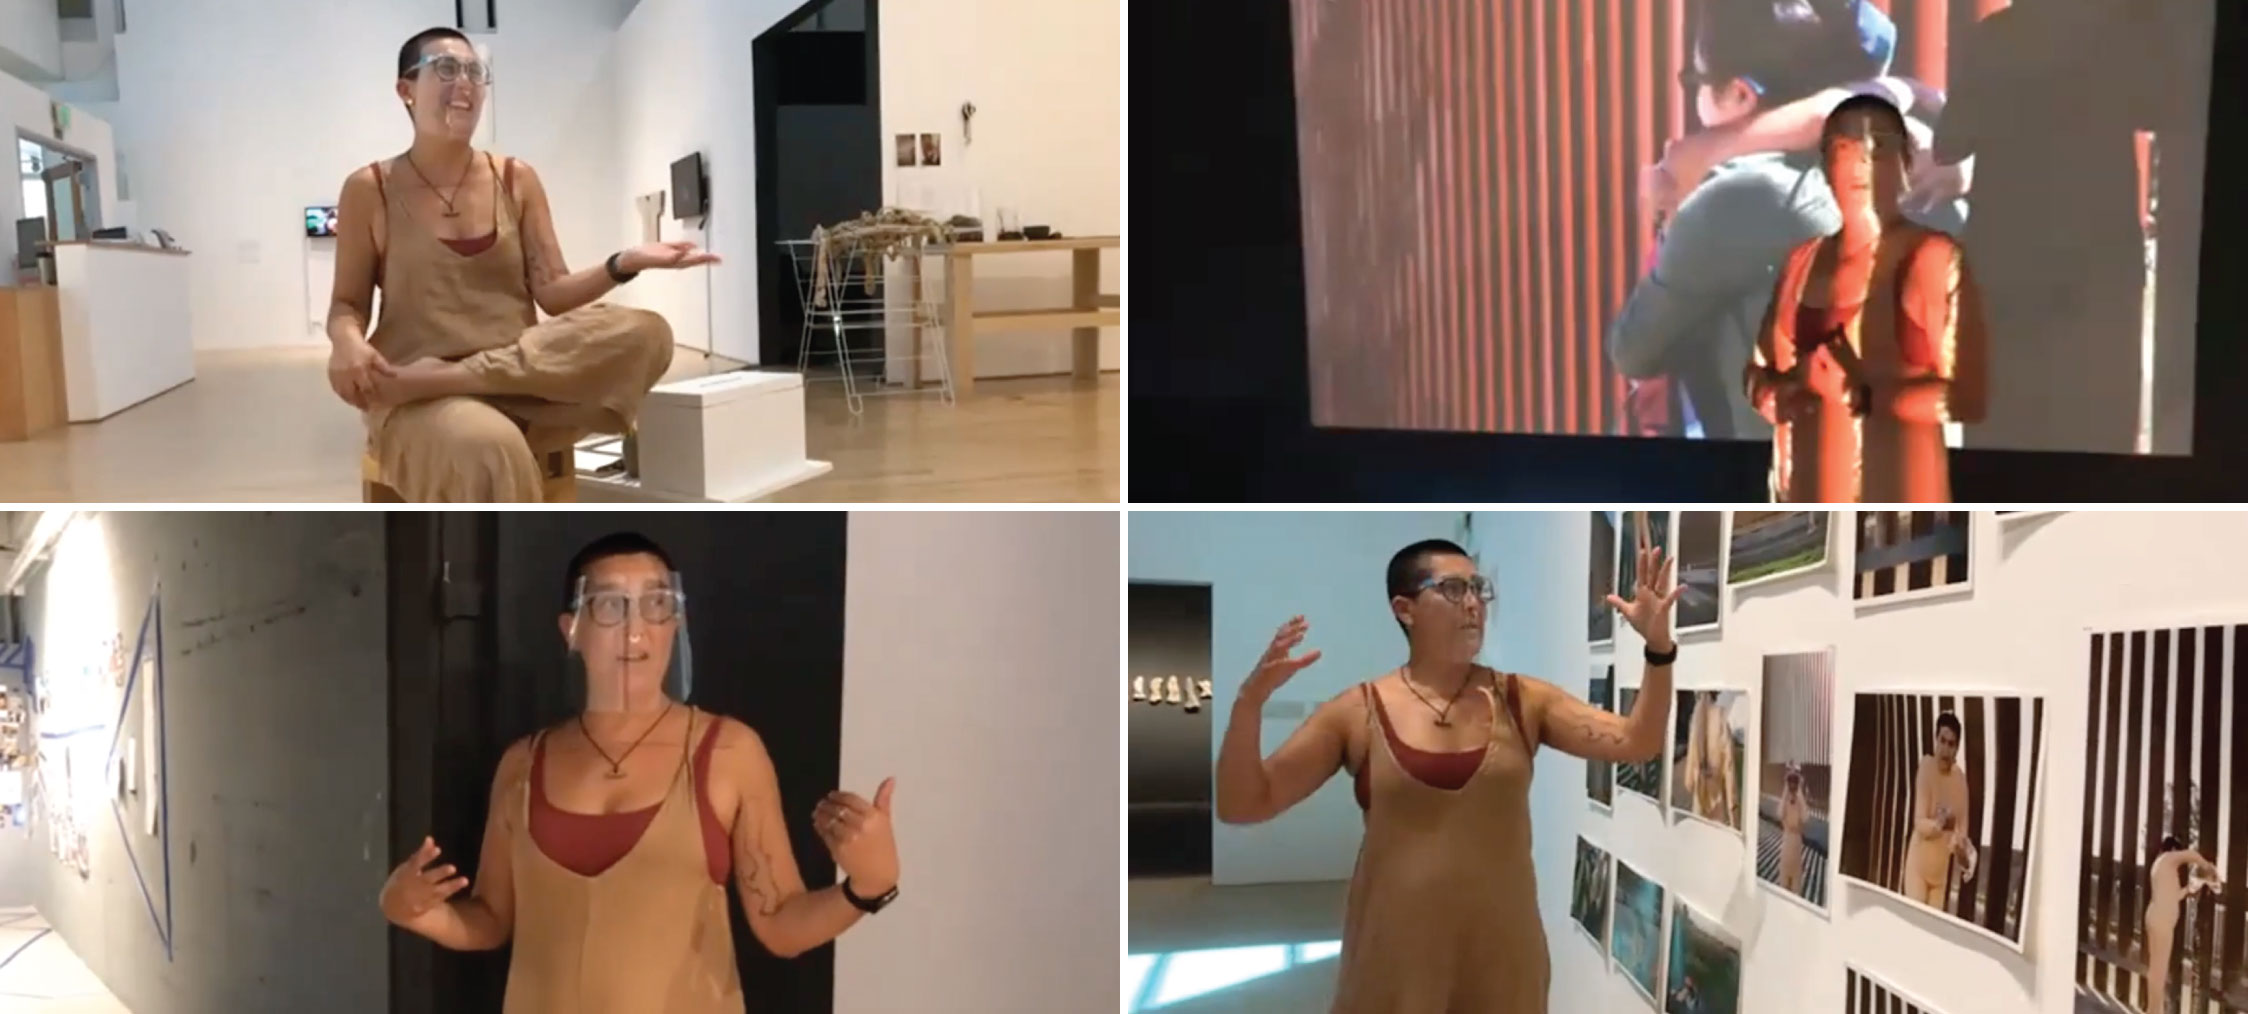 WATCH: Tanya Aguiñiga's Final Armory Exhibition Walkthrough and Q&A